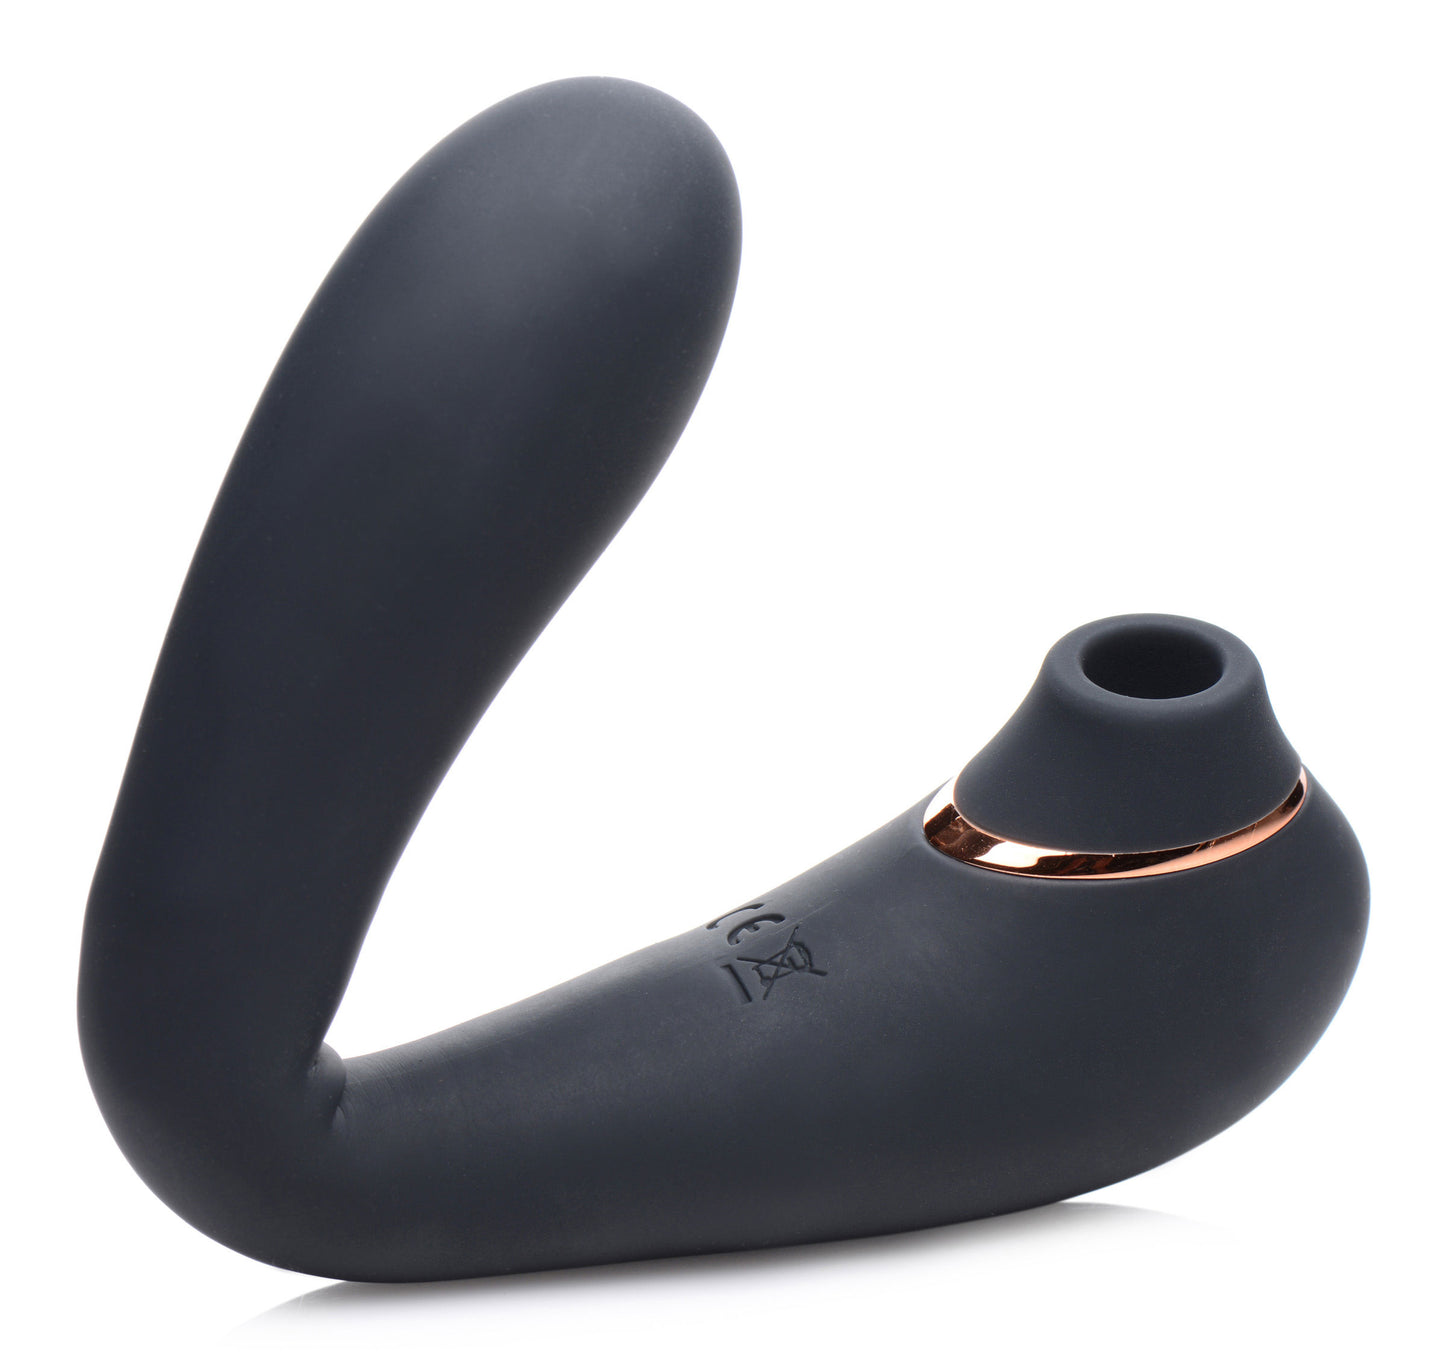 Shegasm Pose 7x Bendable Suction Silicone Vibrator - Black